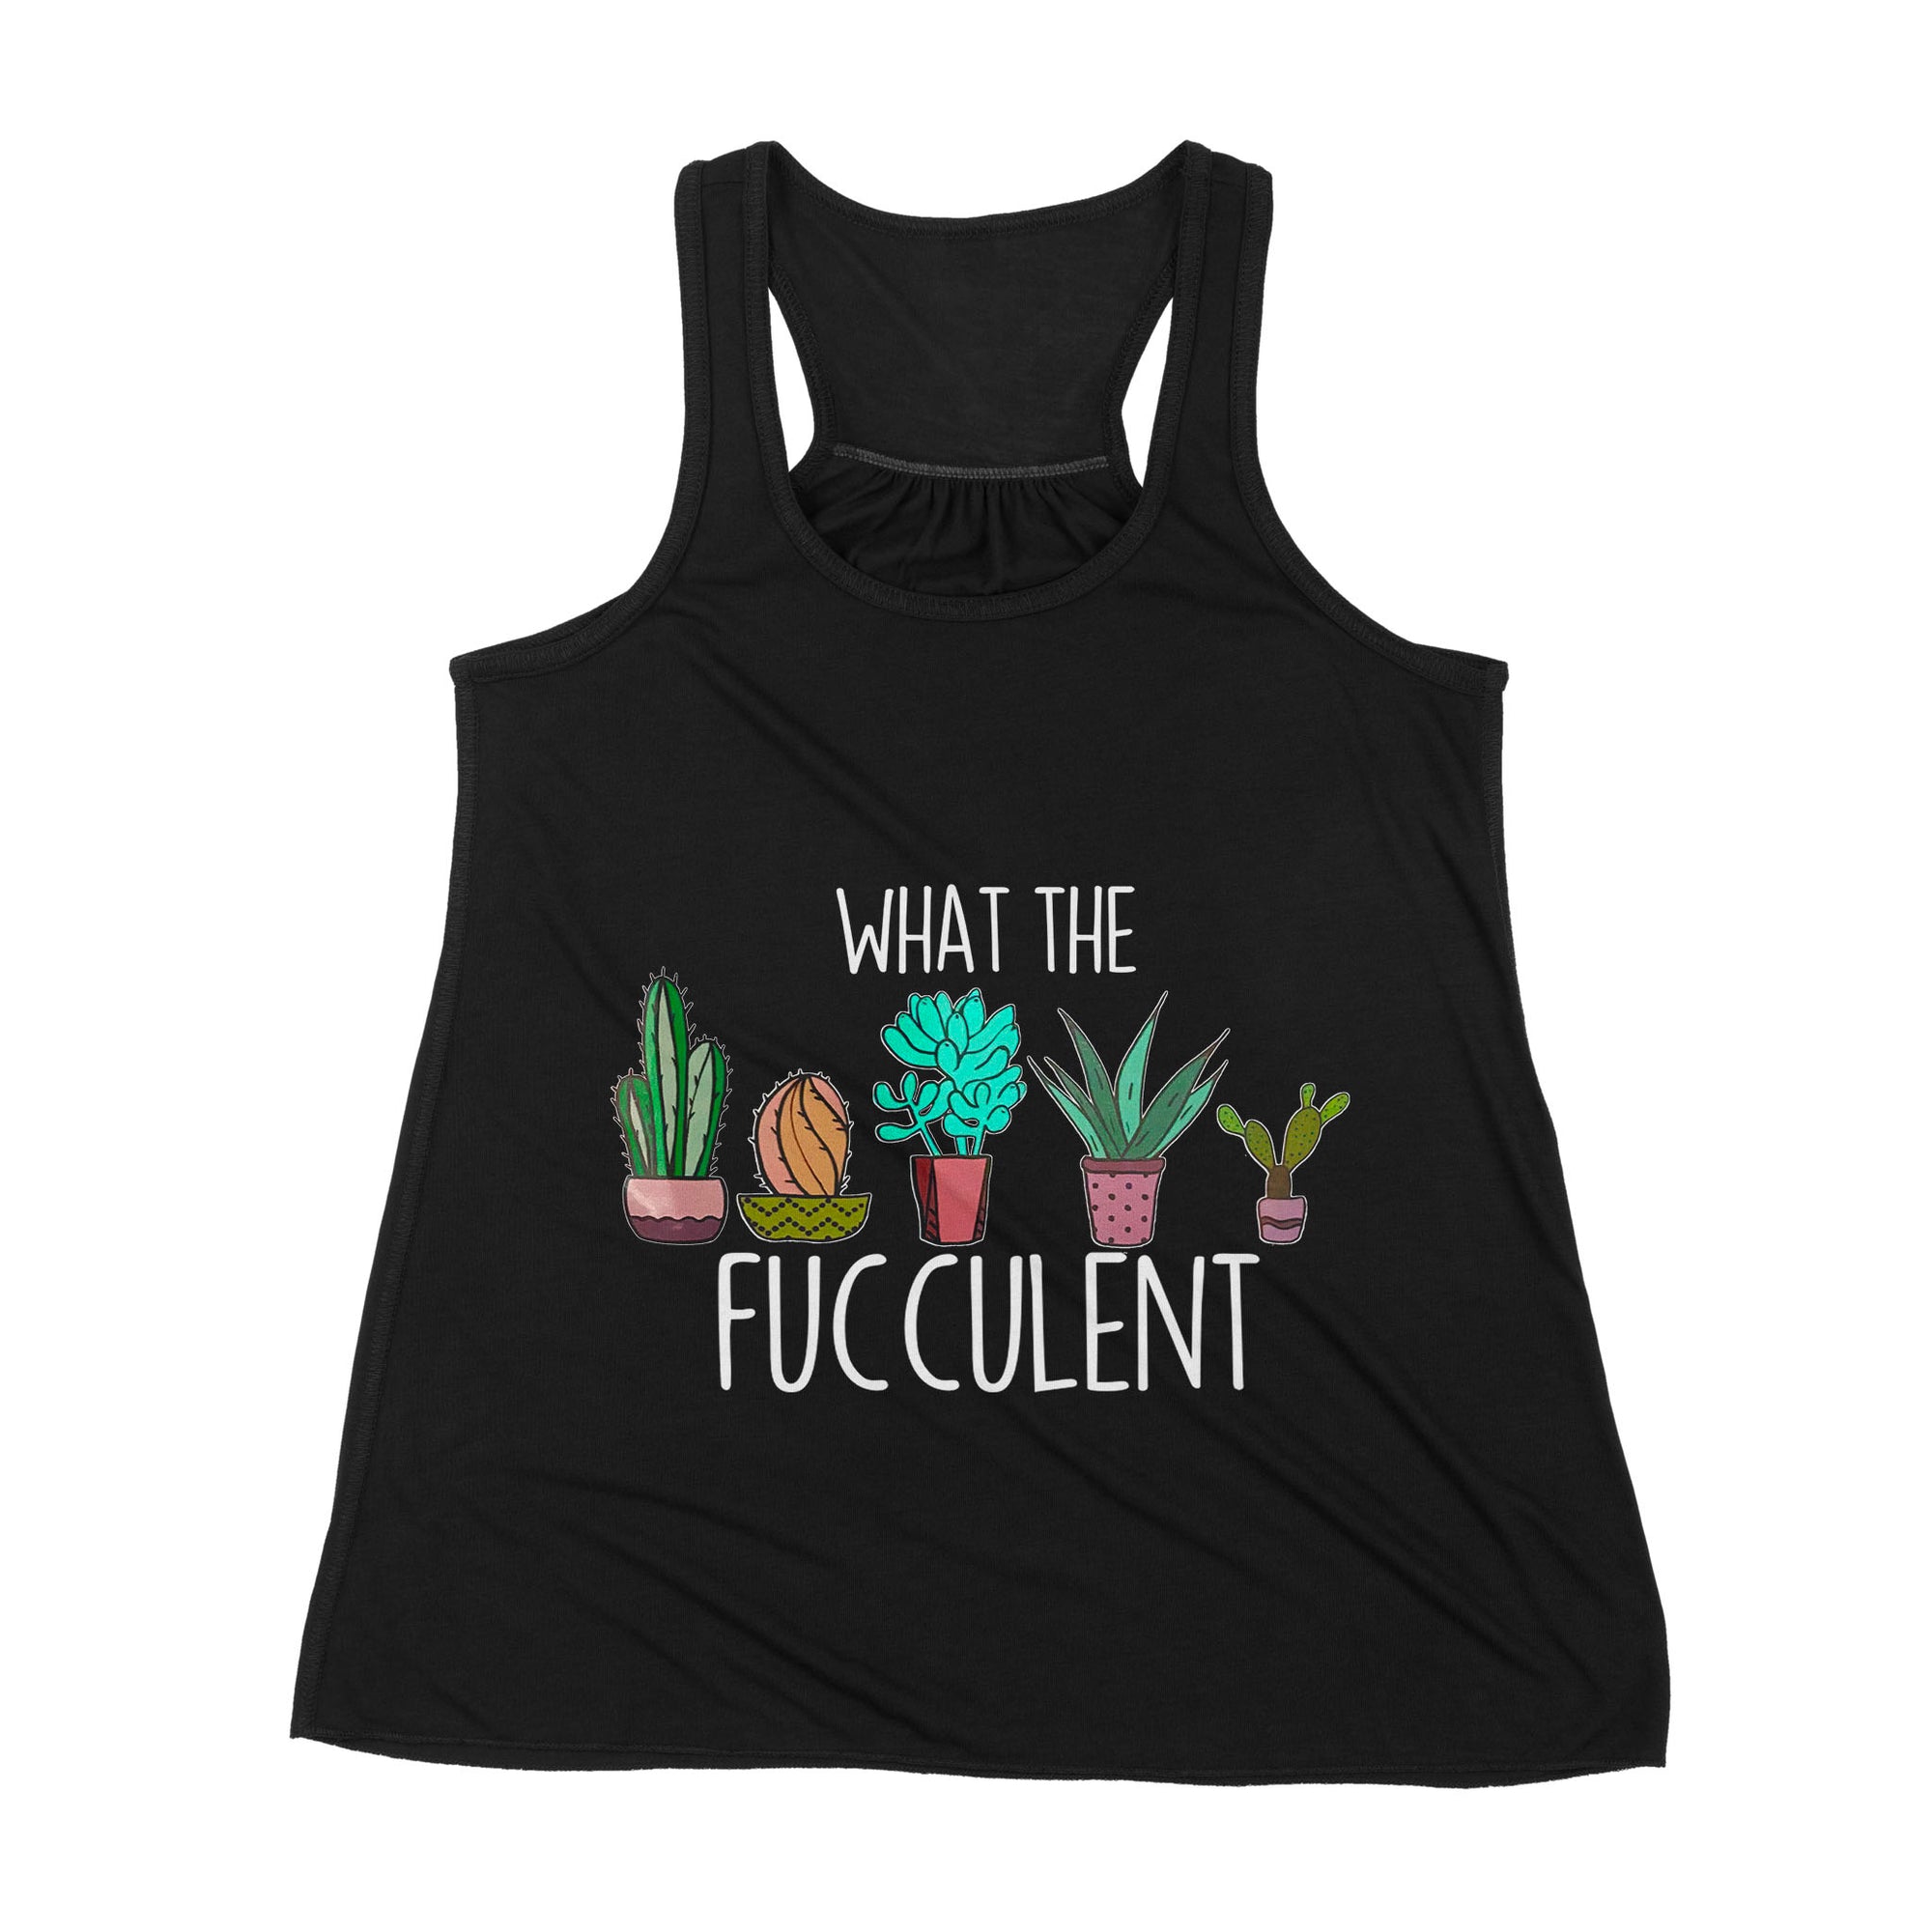 Premium Women's Tank - What the Fucculent Cactus Succulents Plants Gardening